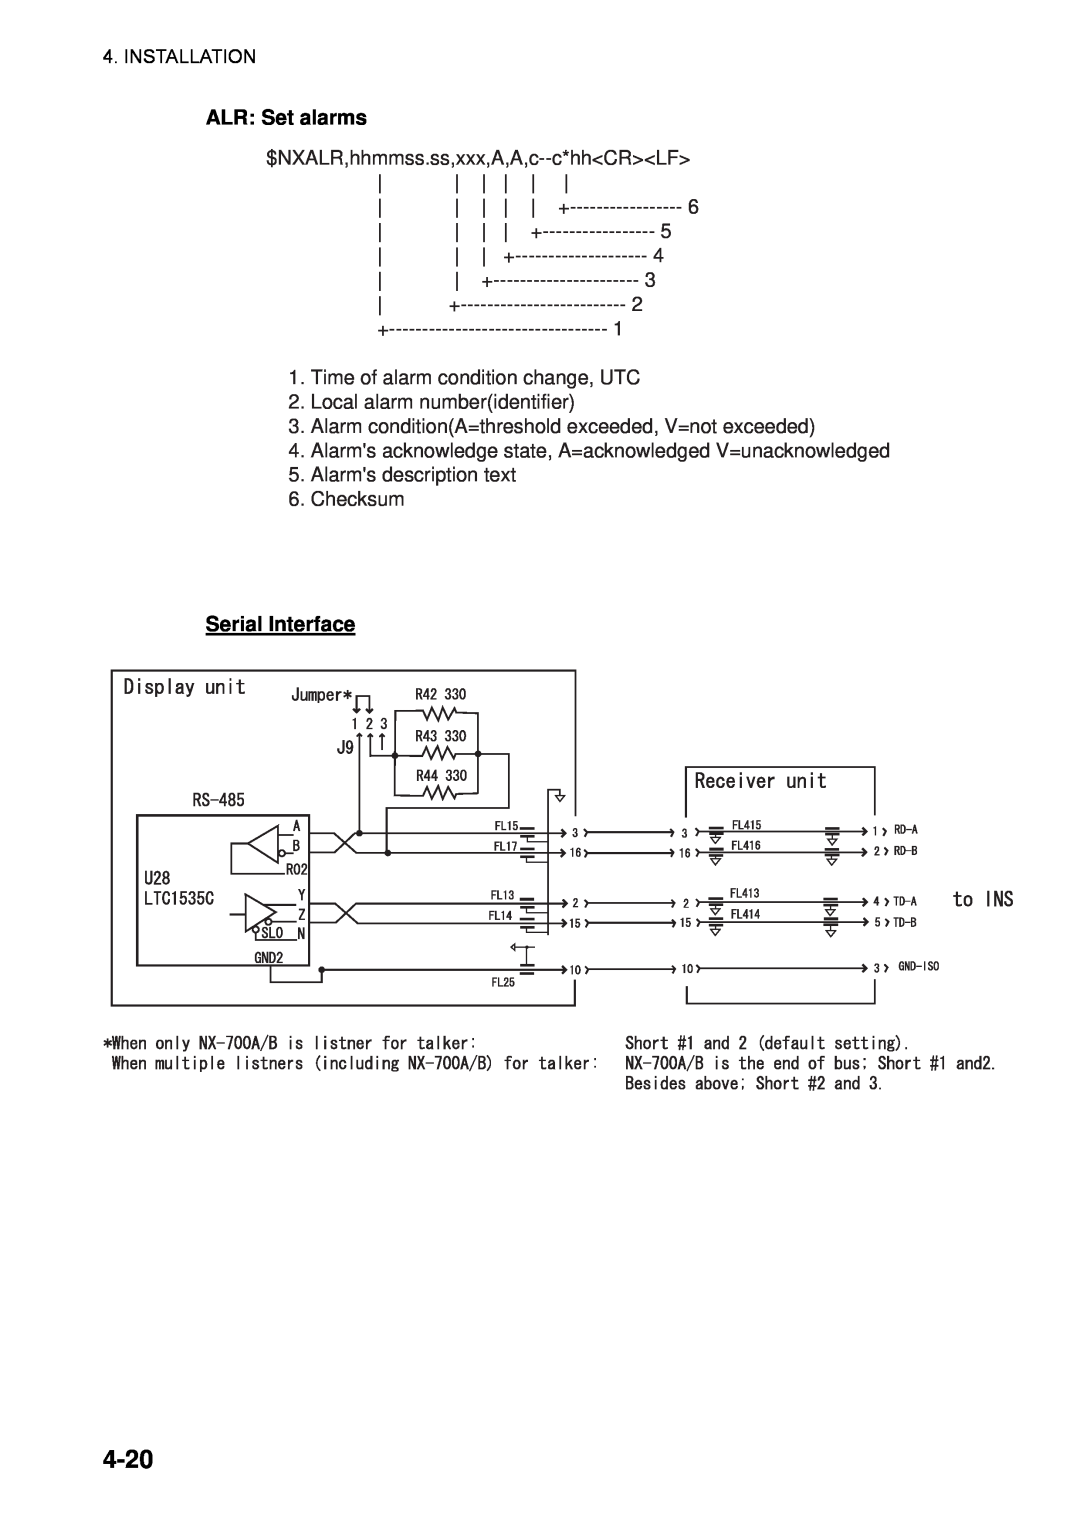 Furuno NX-700B manual 4-20, ALR: Set alarms, Serial Interface 